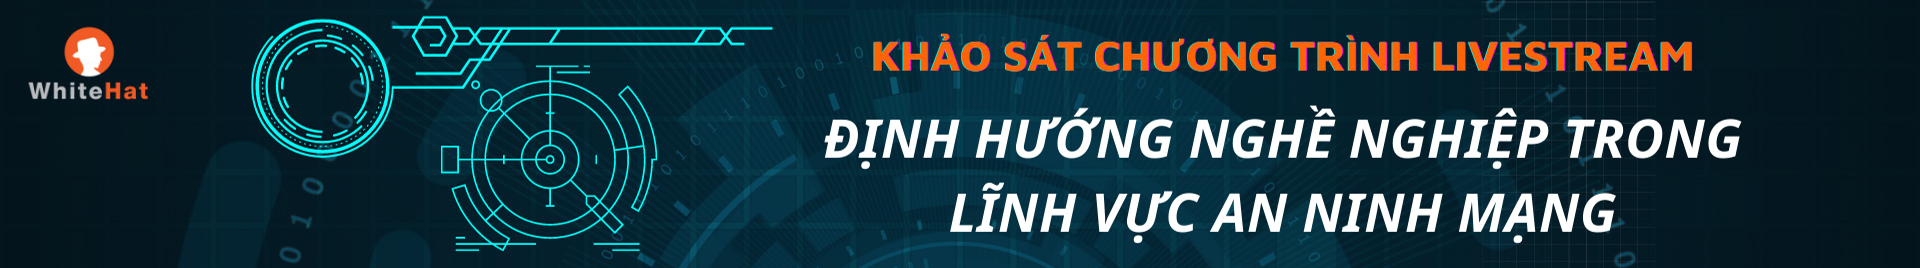 khao-sat-1.jpg